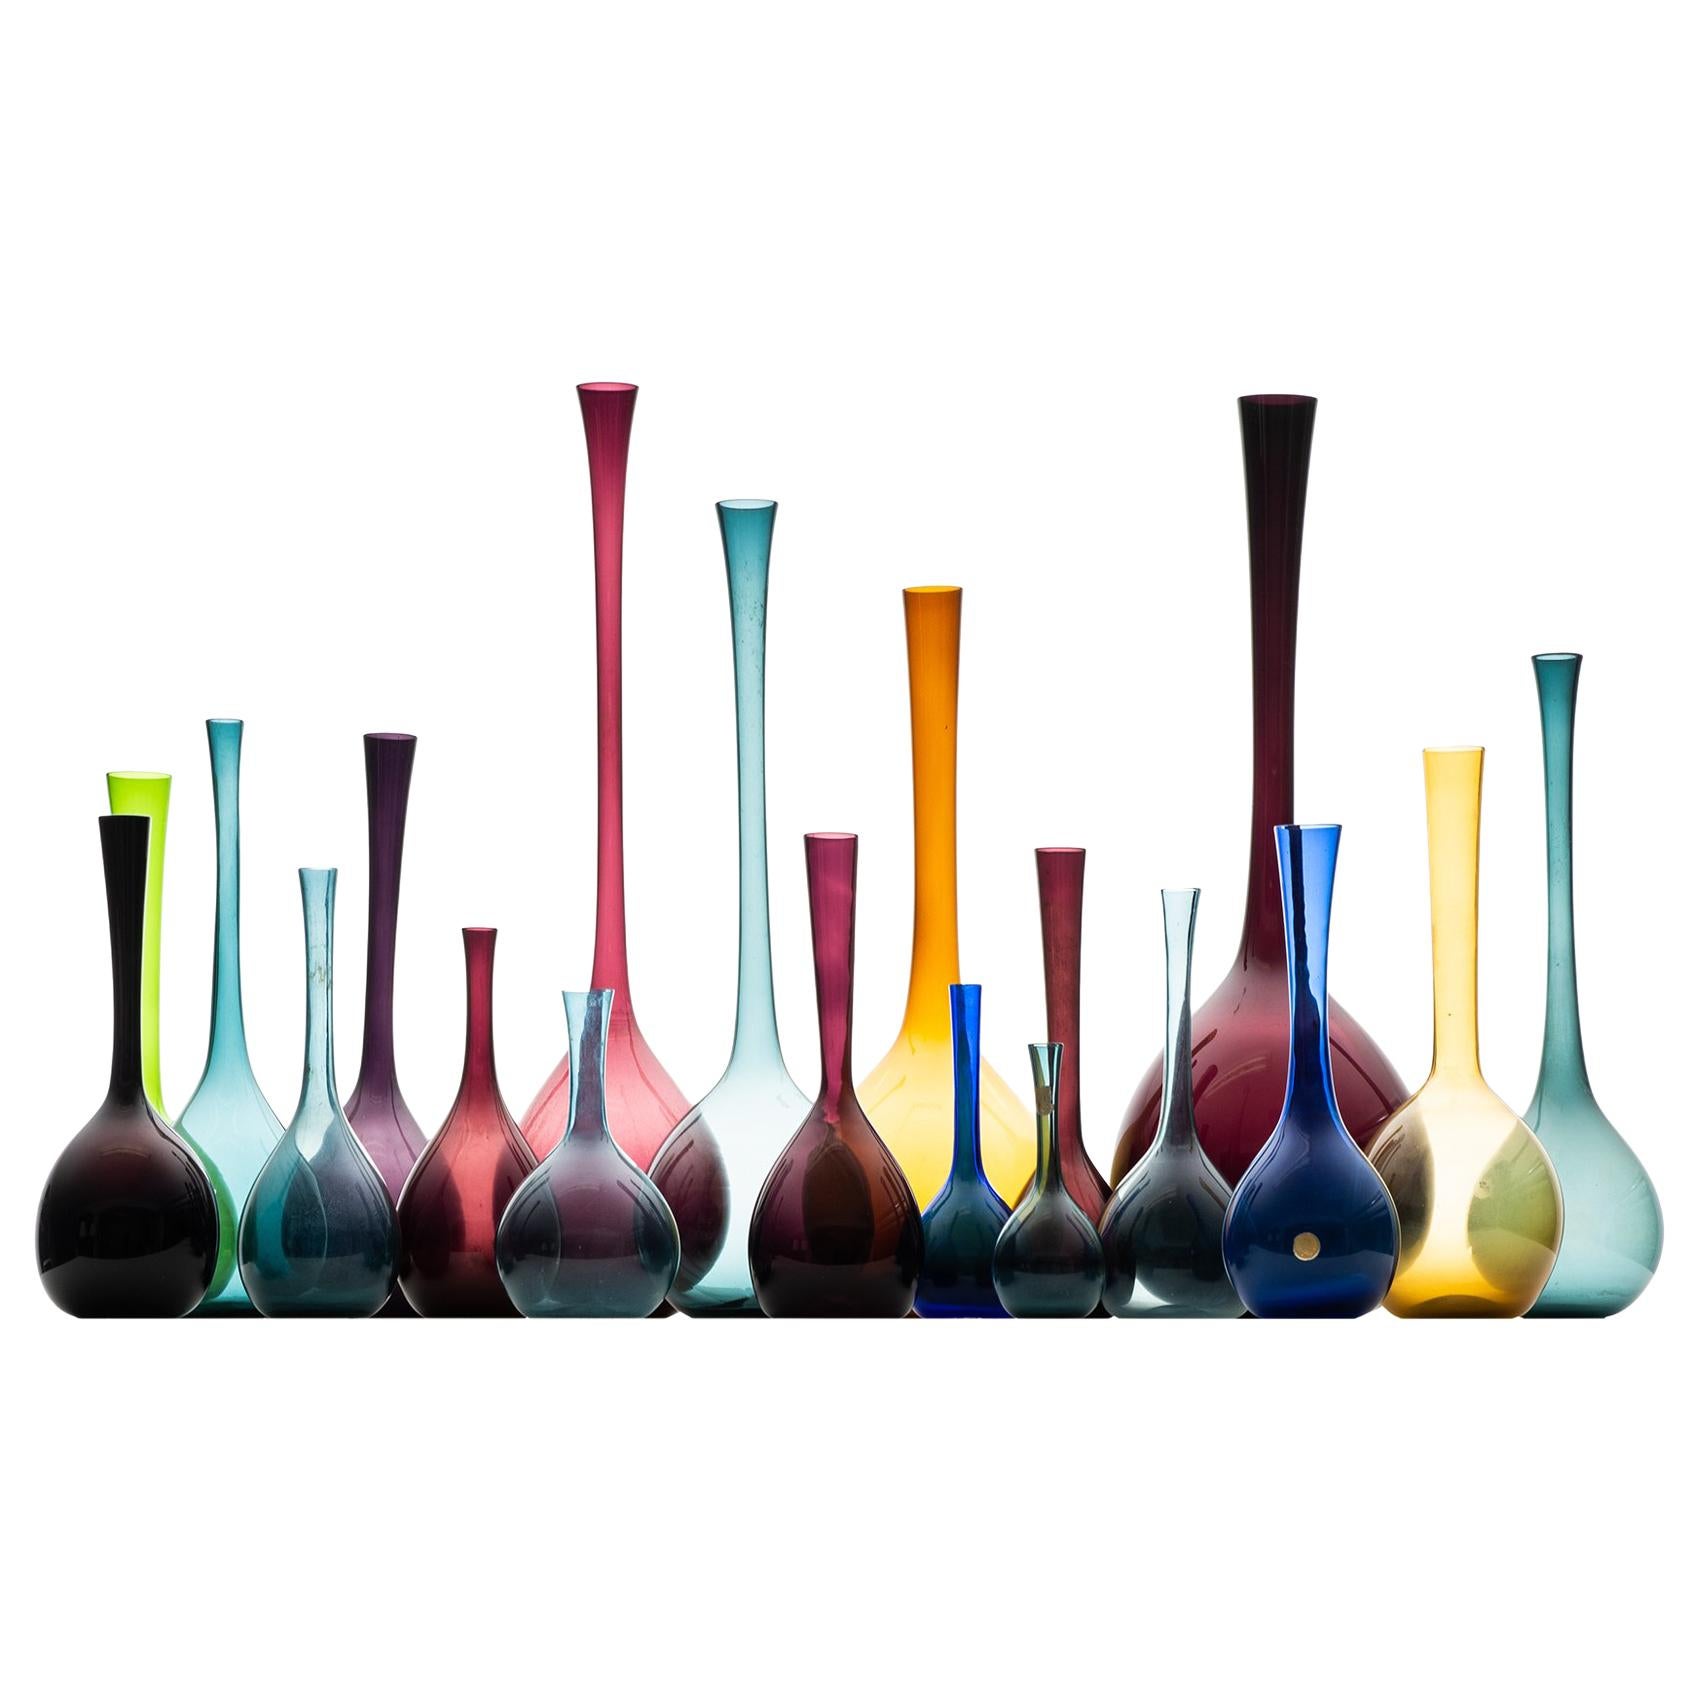 Arthur Percy glass vases produced by Gullaskruf in Sweden